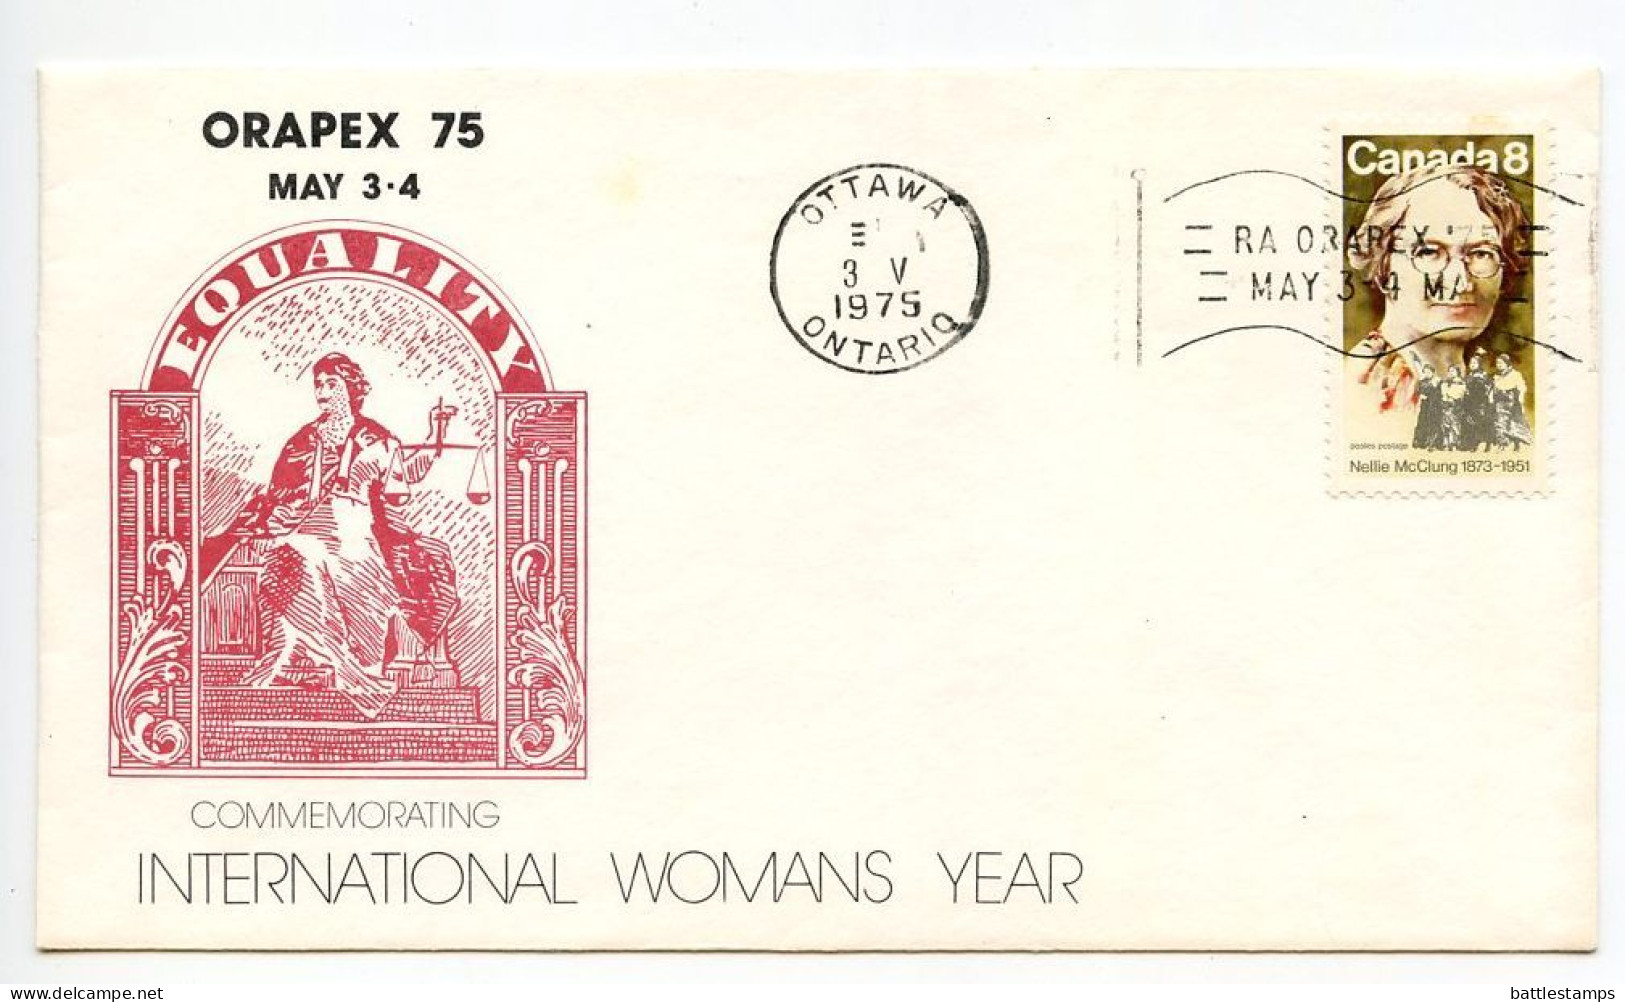 Canada 1975 Commemorative Cover - ORAPEC 75 Philatelic Exhibition - International Womans Year, Scott 622 - Enveloppes Commémoratives